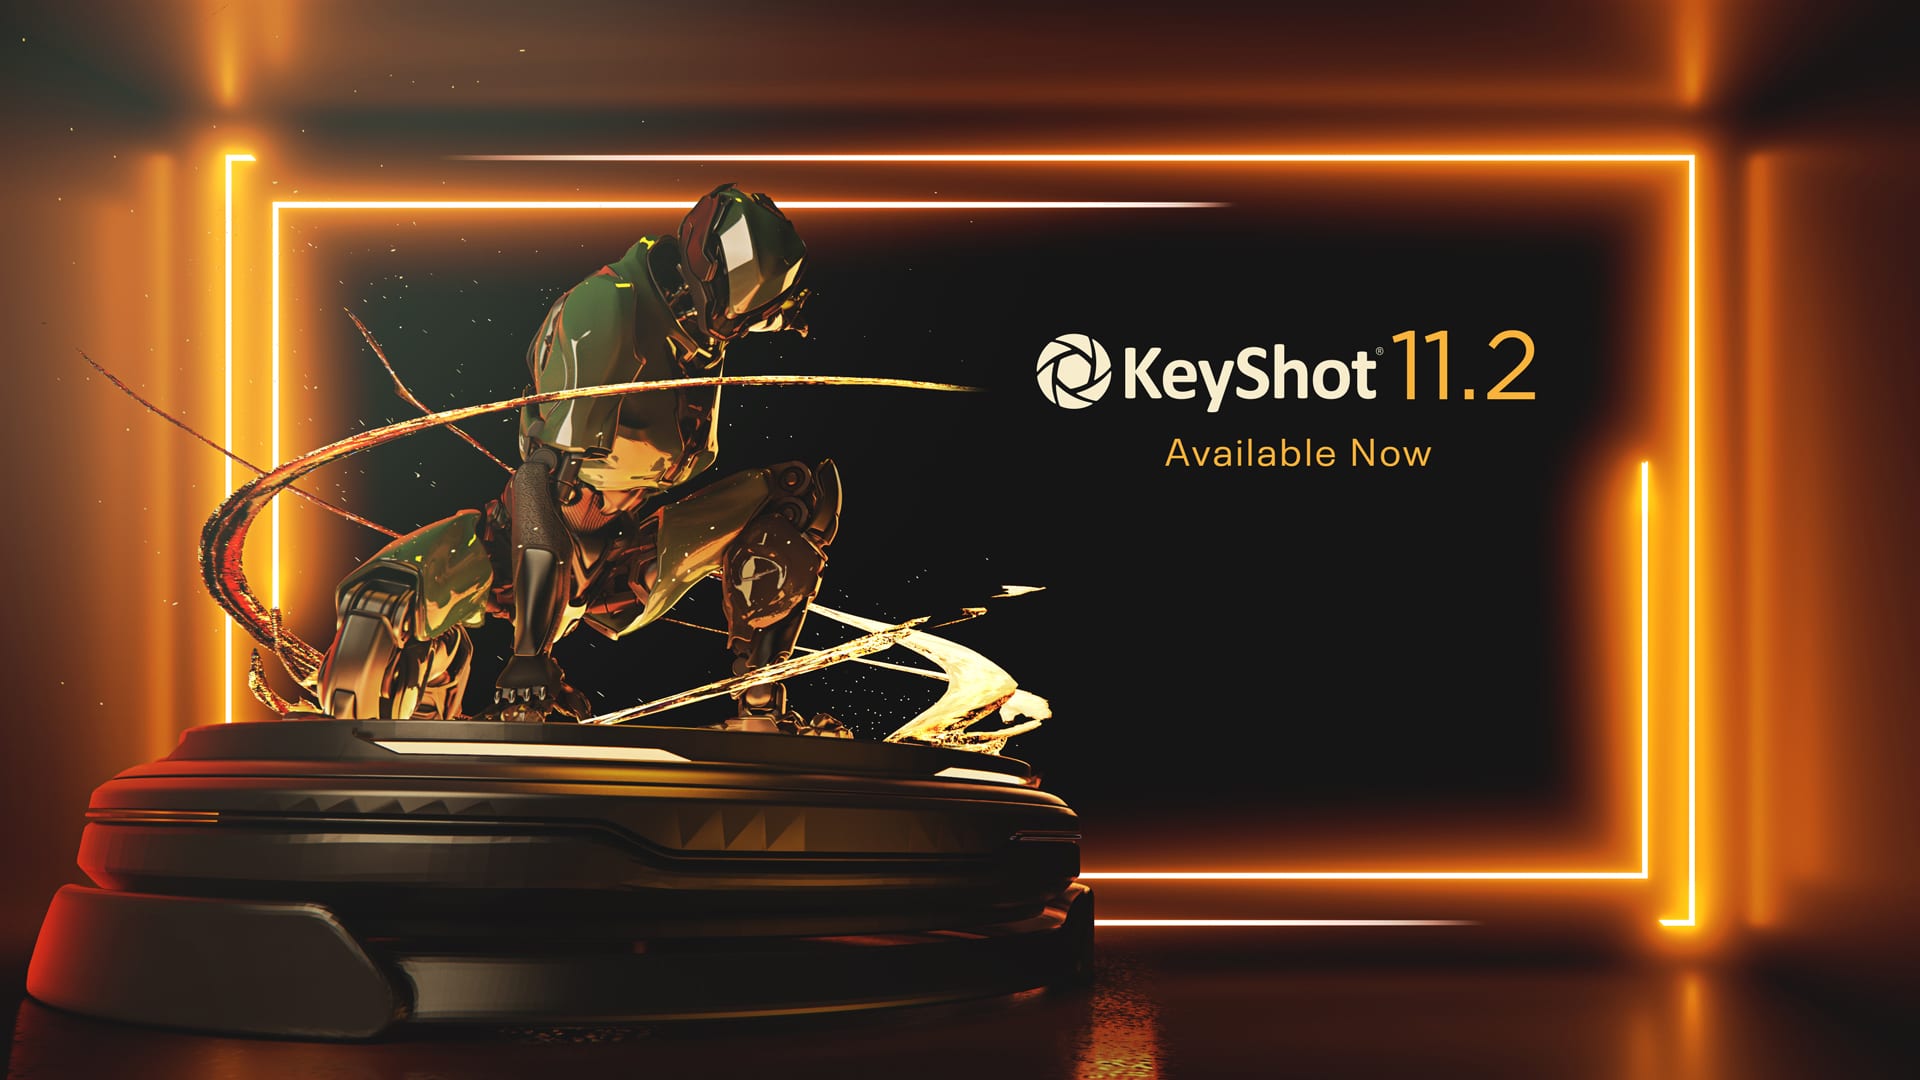 KeyShot 11.2 Jetzt verfügbar